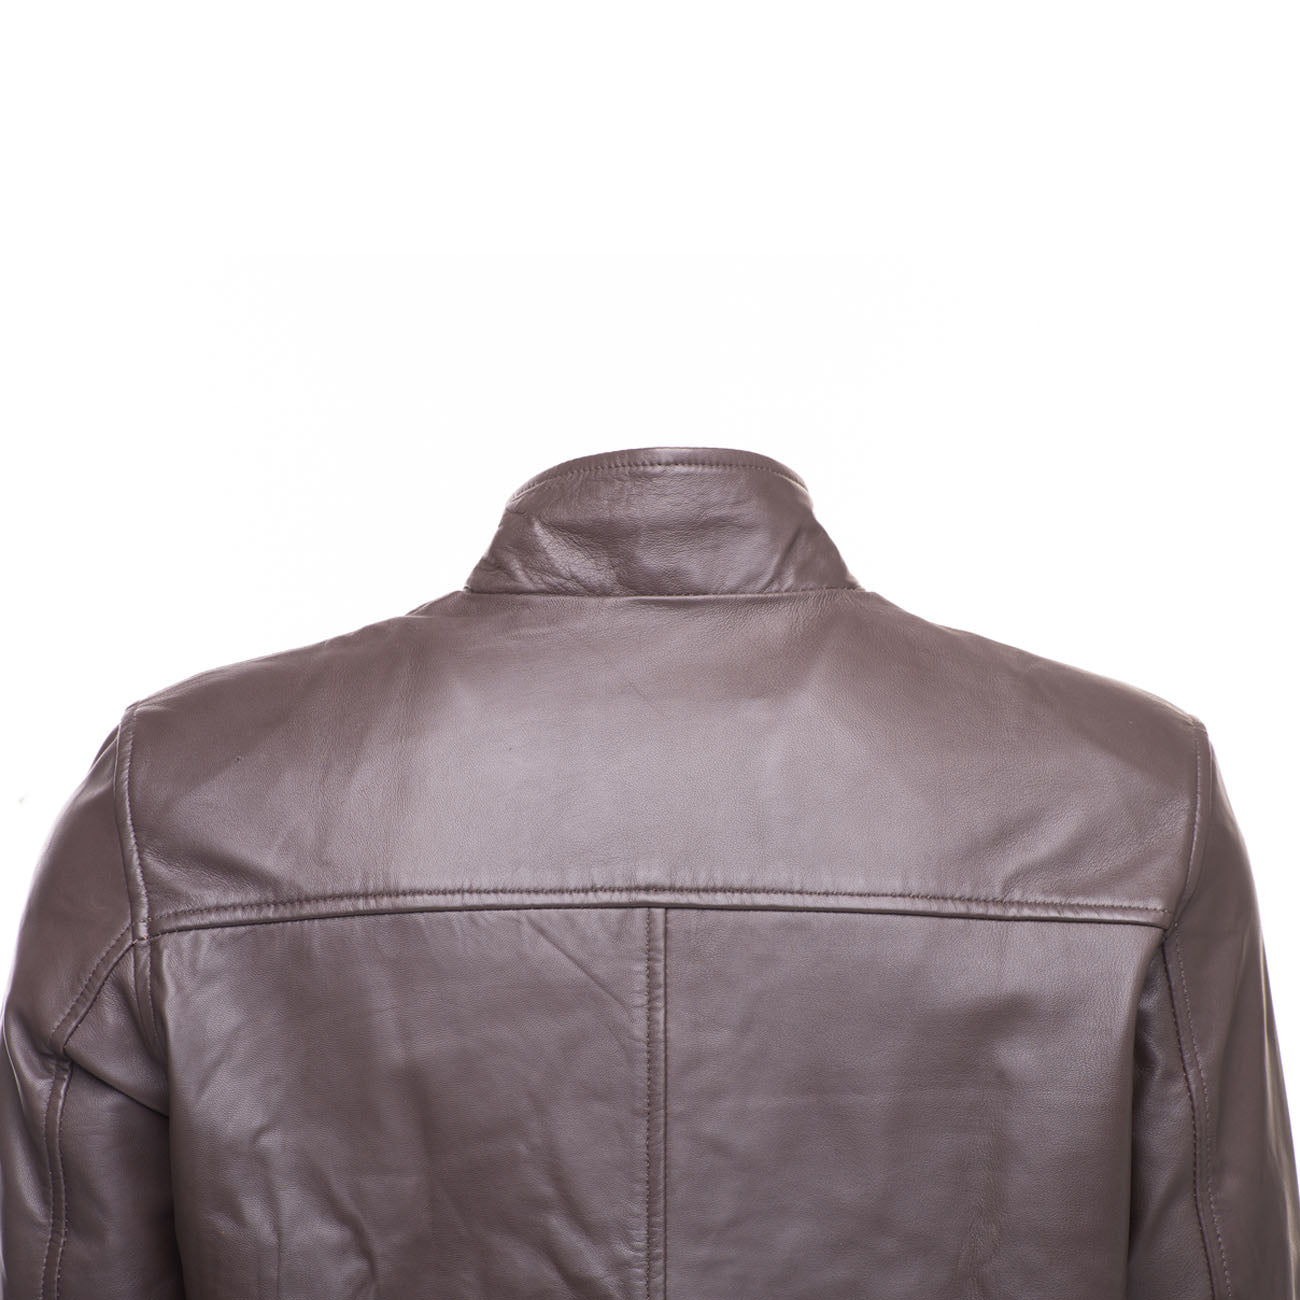 Henry Mateo Dark Brown leather jacket